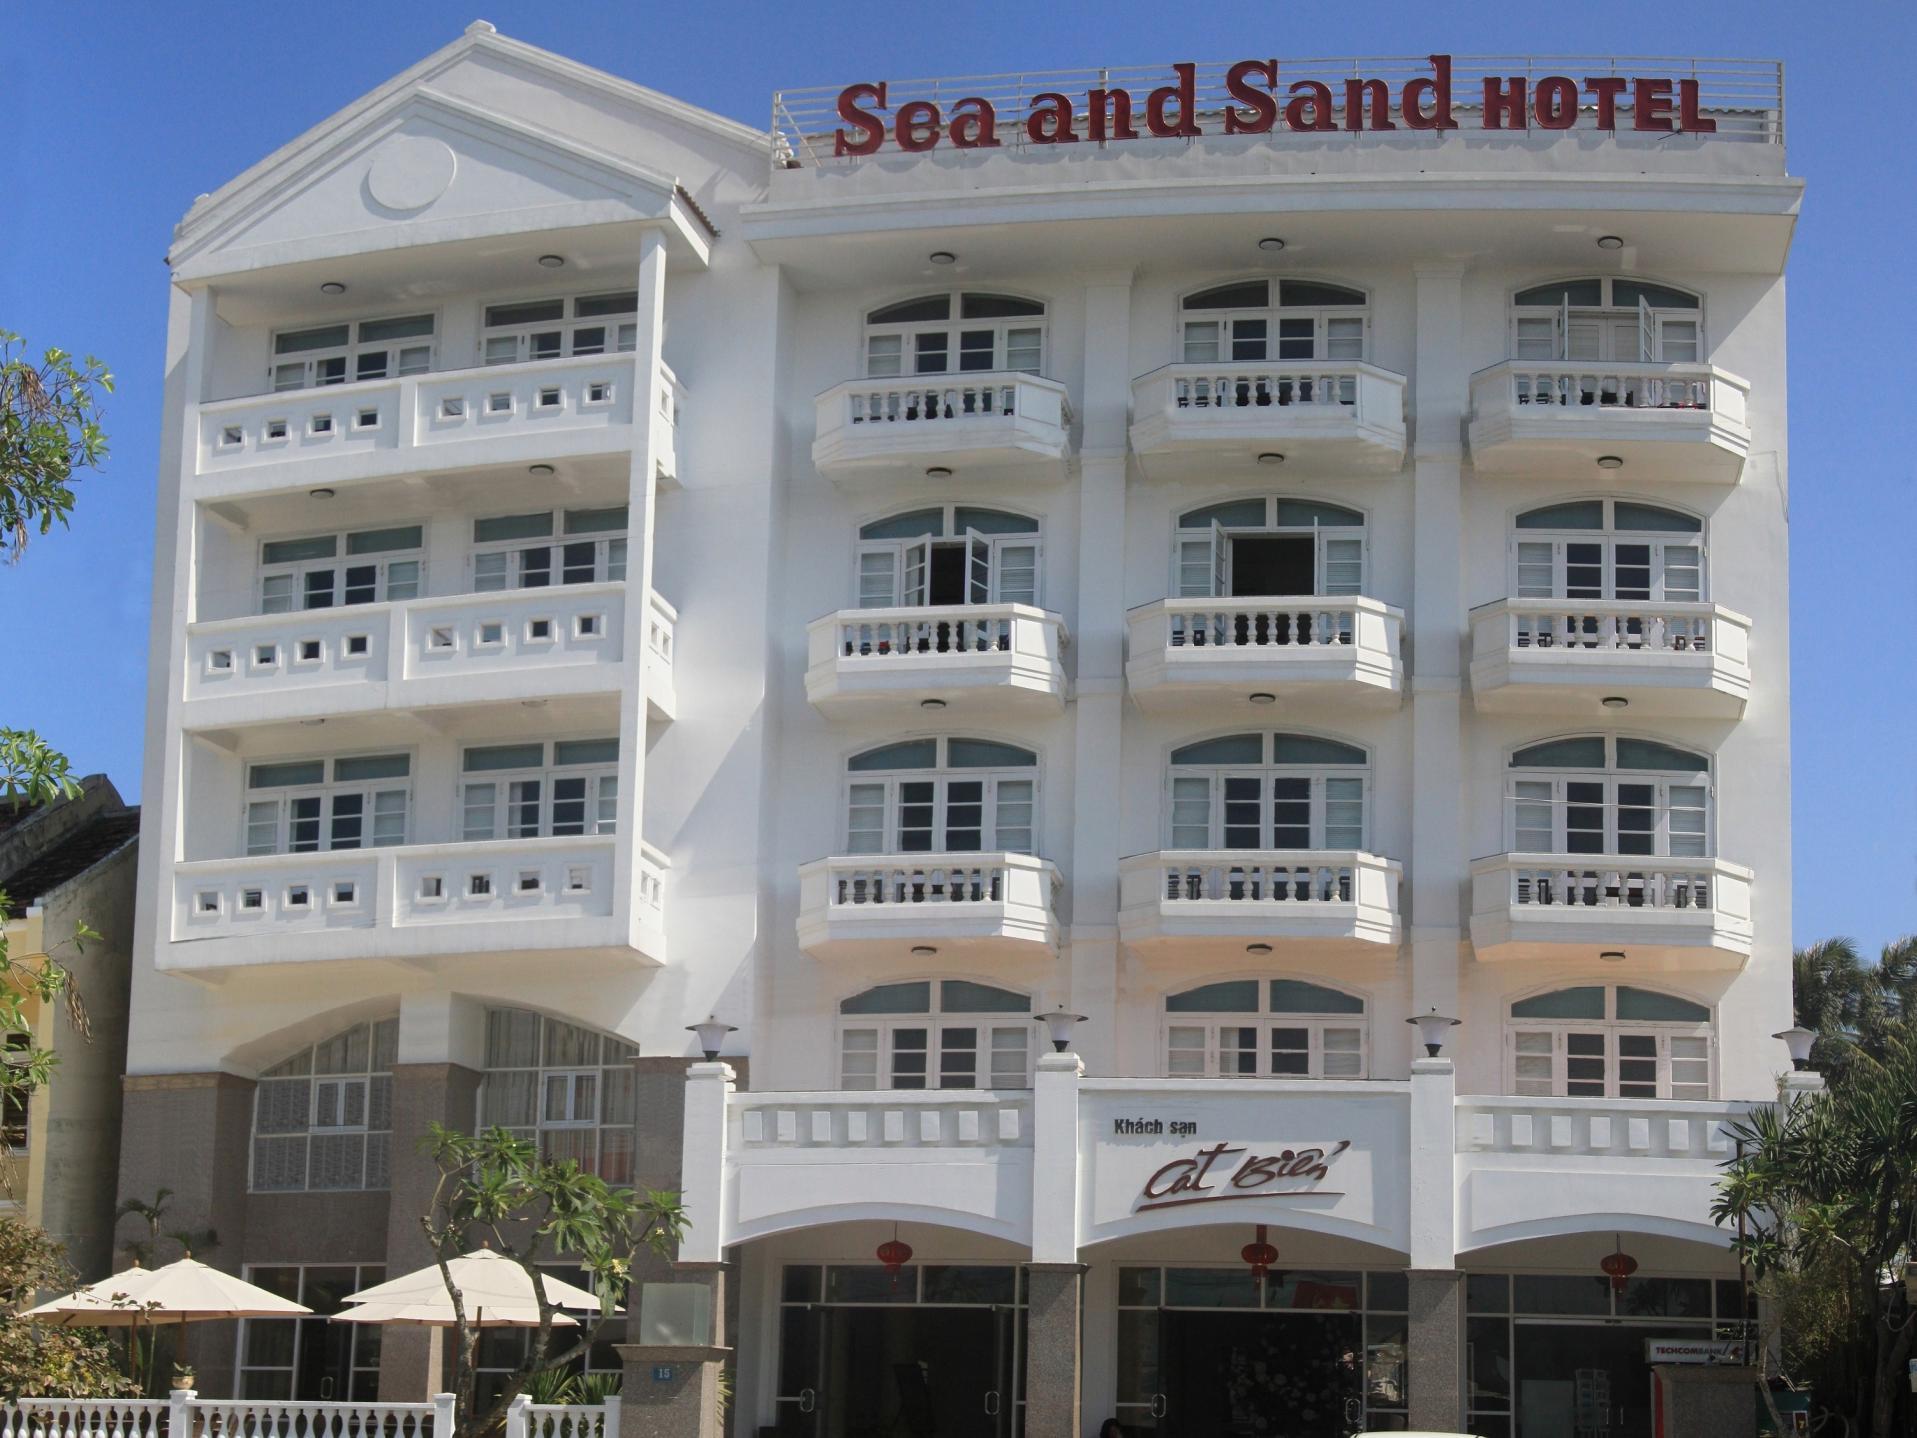 Sea and Sand Hotel - Hotell och Boende i Vietnam , Hoi An